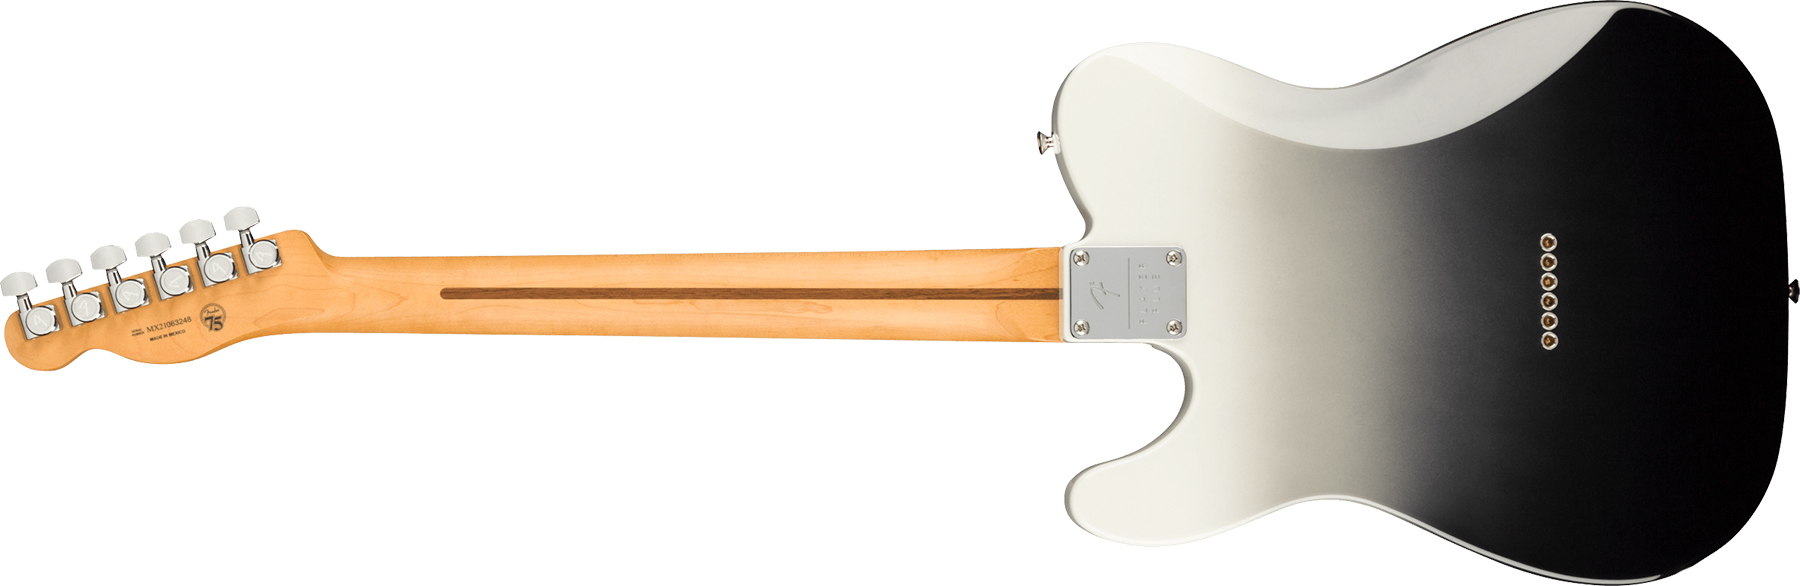 Fender Tele Player Plus Mex 2s Ht Pf - Silver Smoke - Guitarra eléctrica con forma de tel - Variation 1